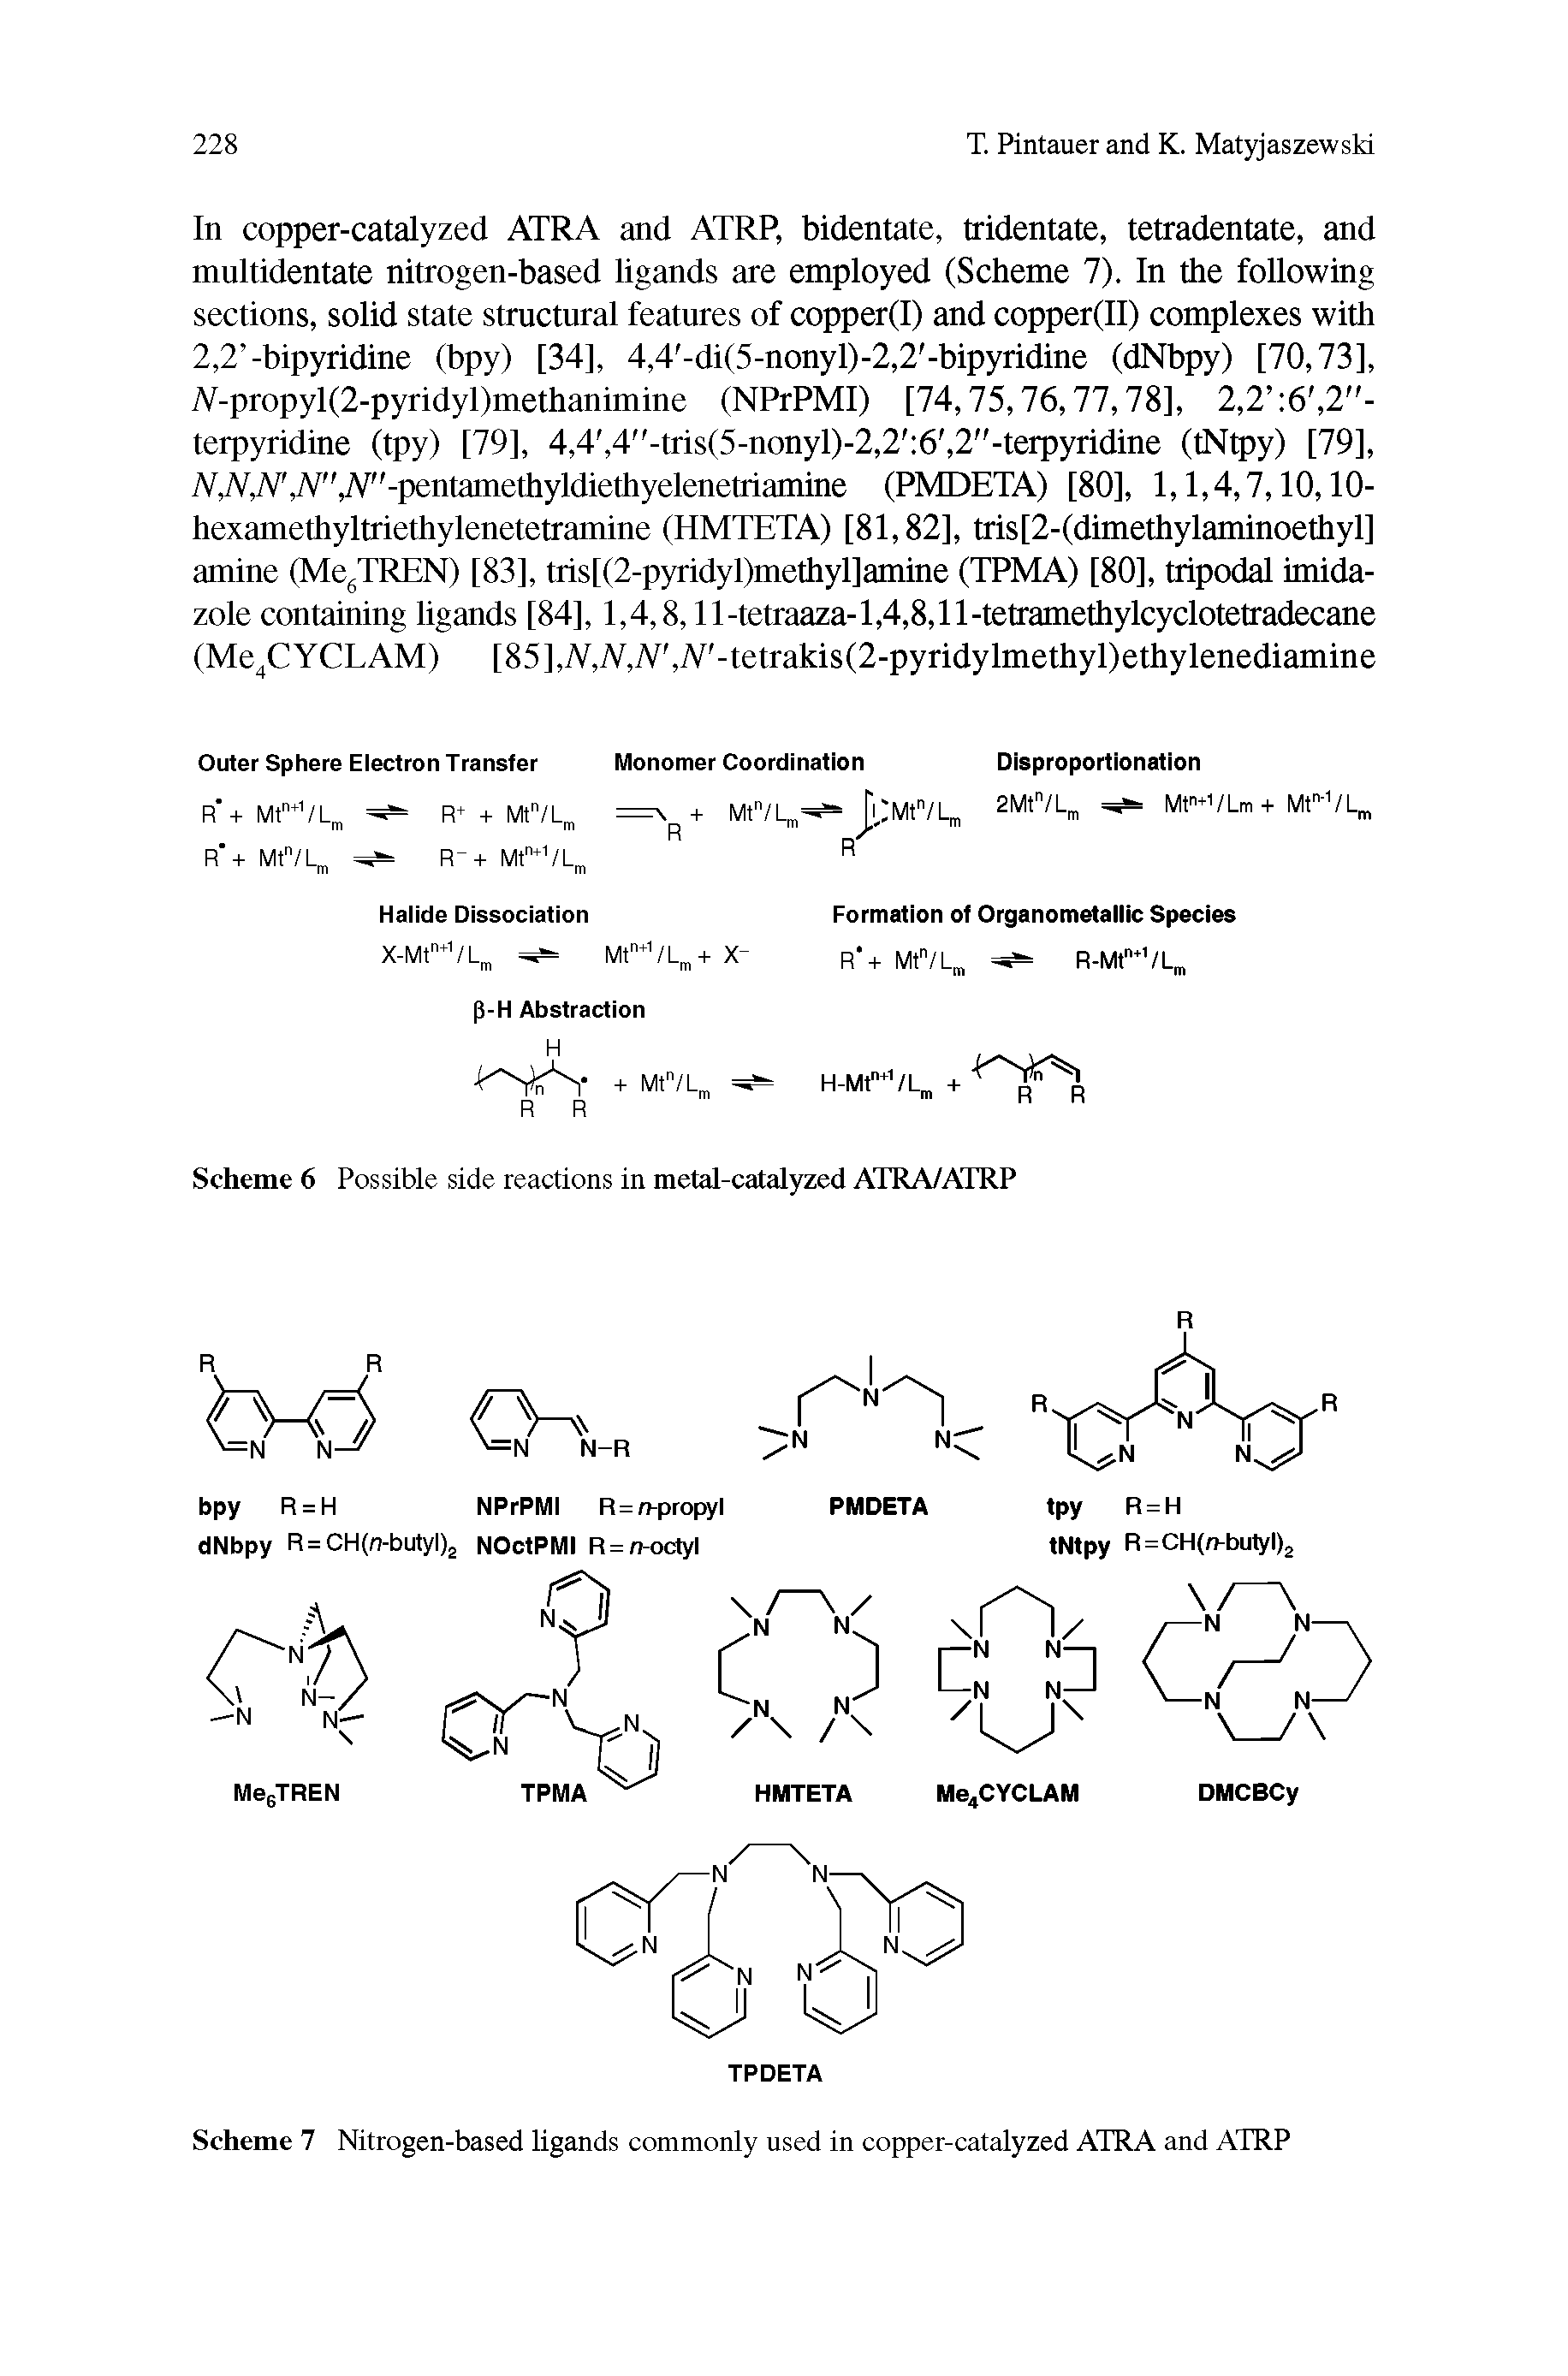 Scheme 6 Possible side reactions in metal-catalyzed ATRA/ATRP...